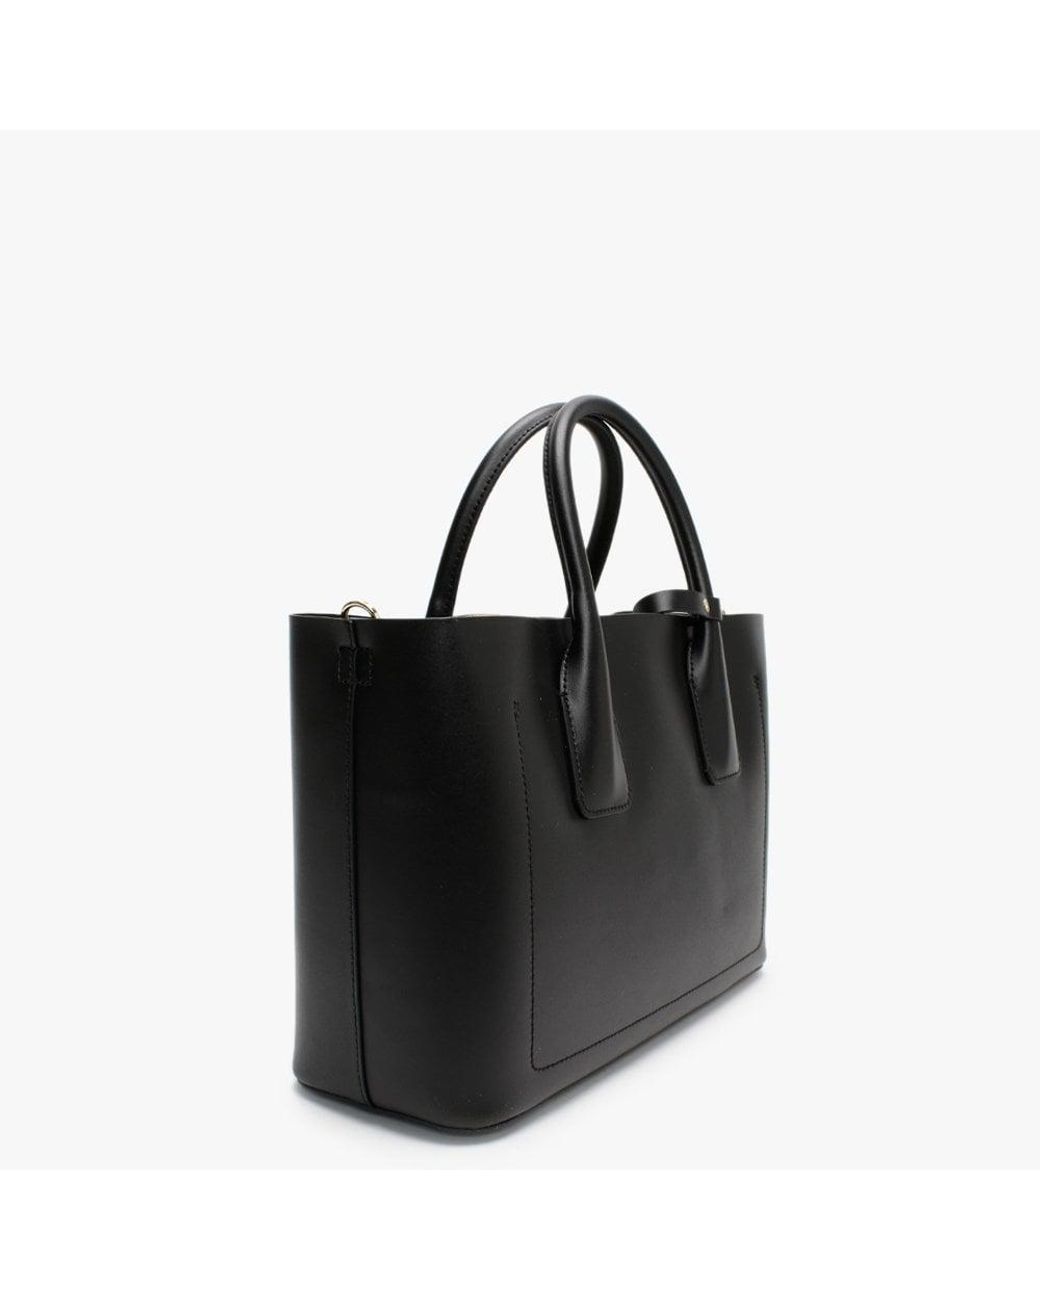 DKNY Megan East West Black Leather Tote Bag | Lyst Australia